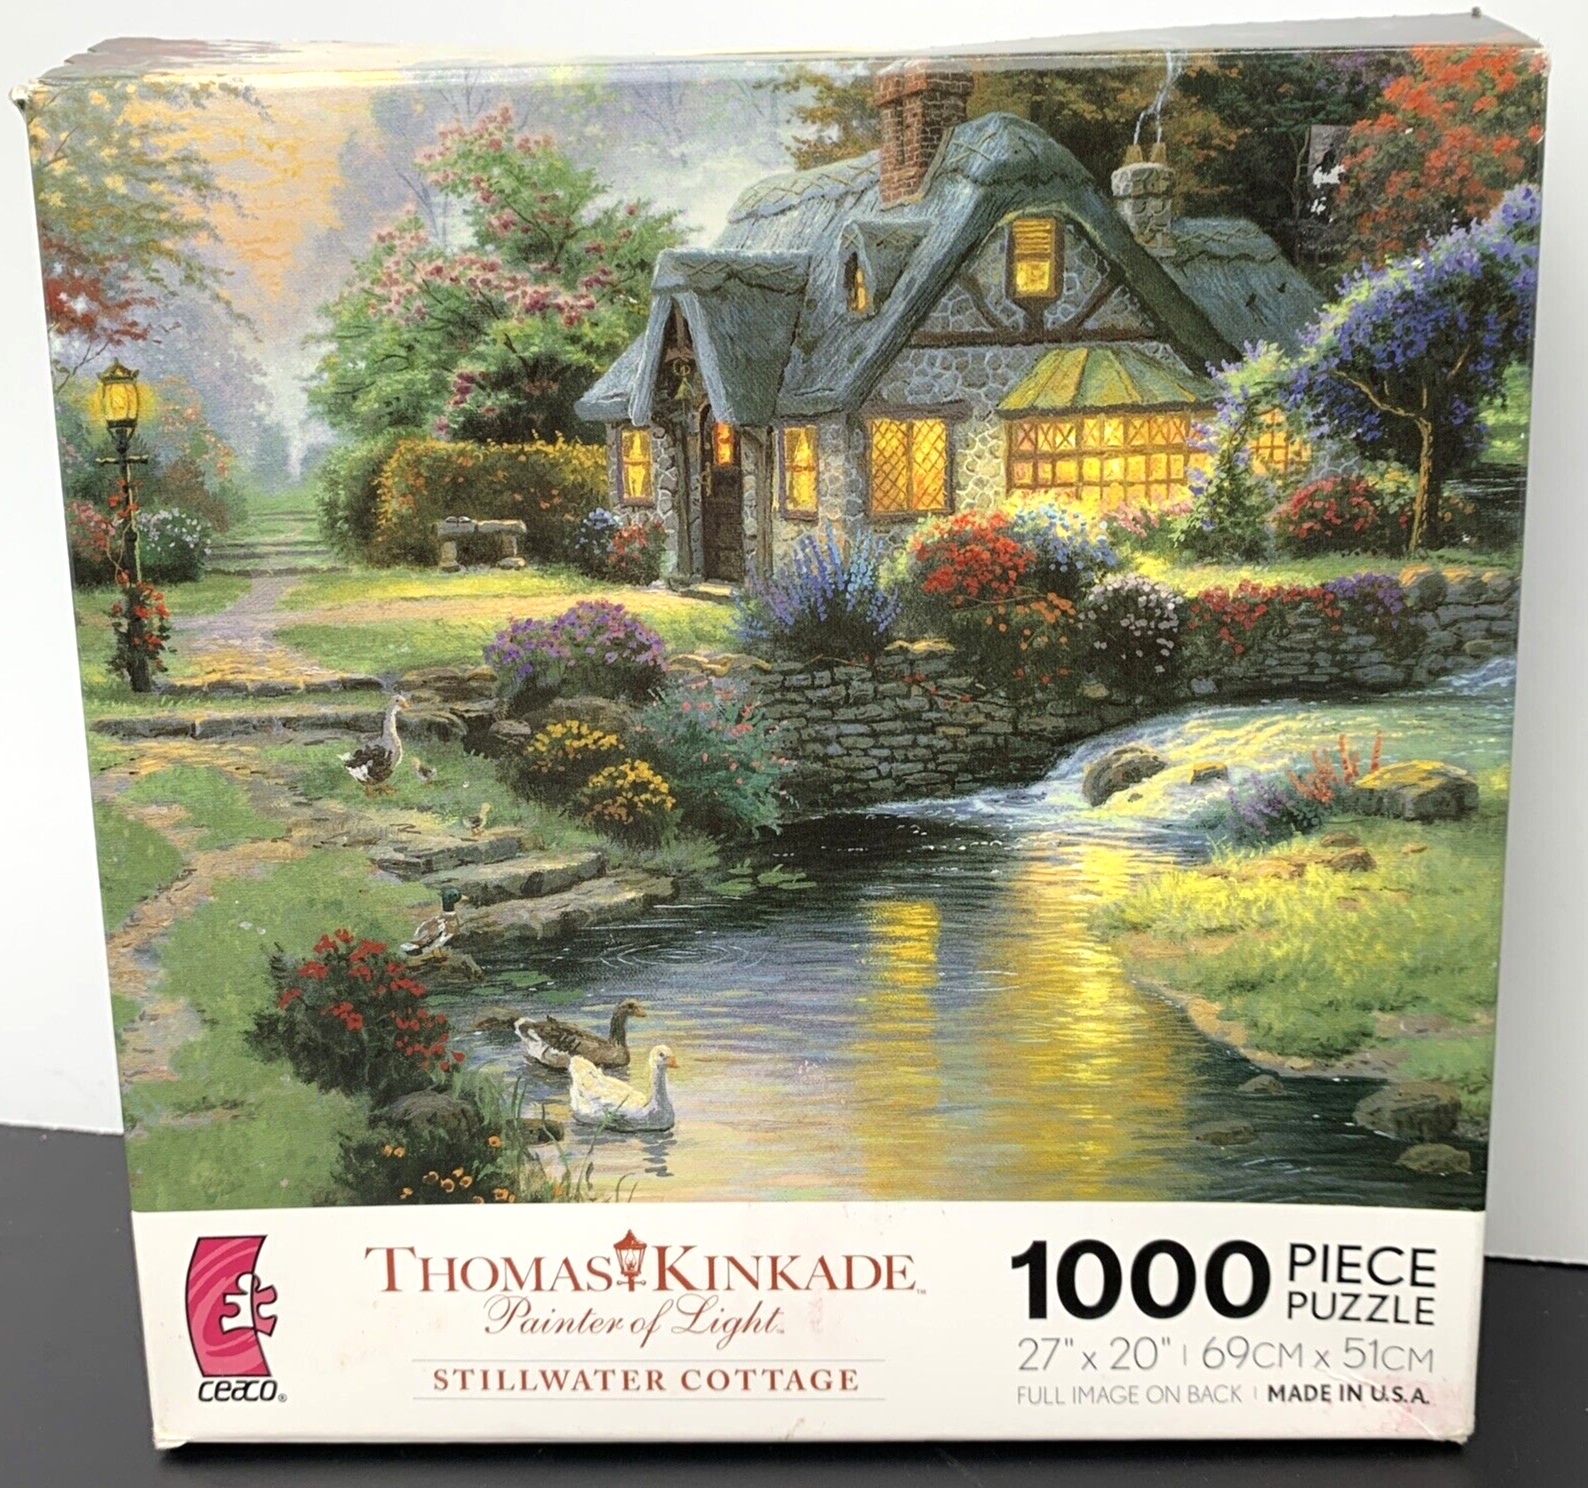 Thomas Kinkade STILLWATER COTTAGE 1000 Pc Puzzle 27"x20 COMPLETE 2009 Ceaco - $9.89